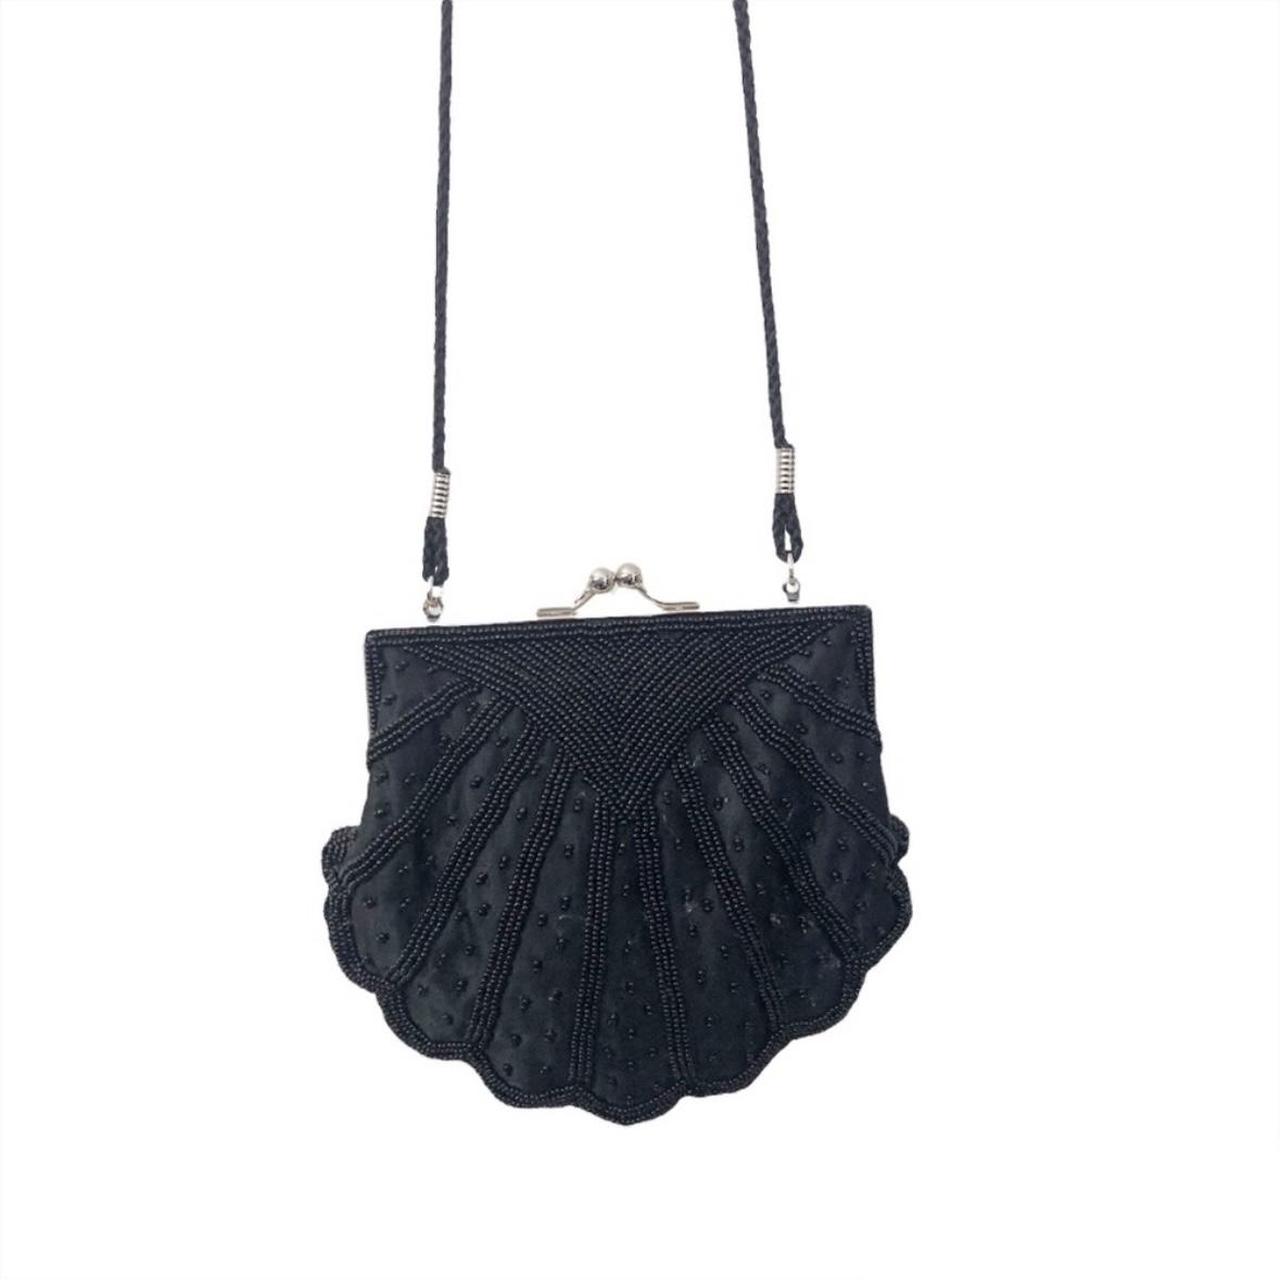 Beaded Hand Bag Black La Regale Evening Purse Vintage Black 